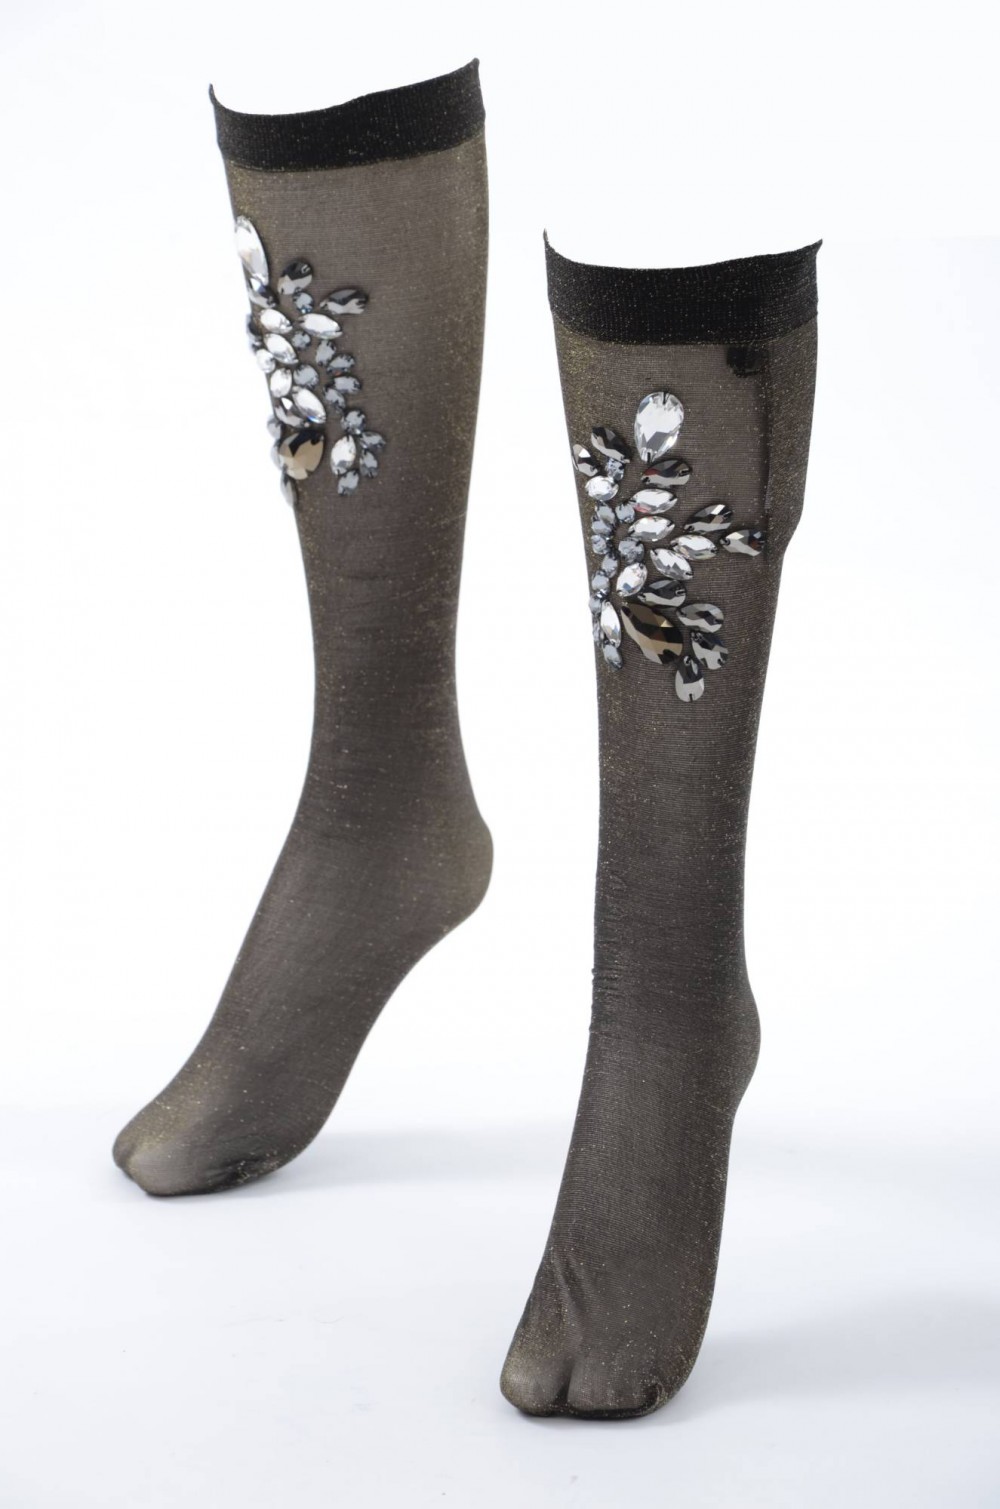 Women's Sequined Leggings by Dolce & Gabbana